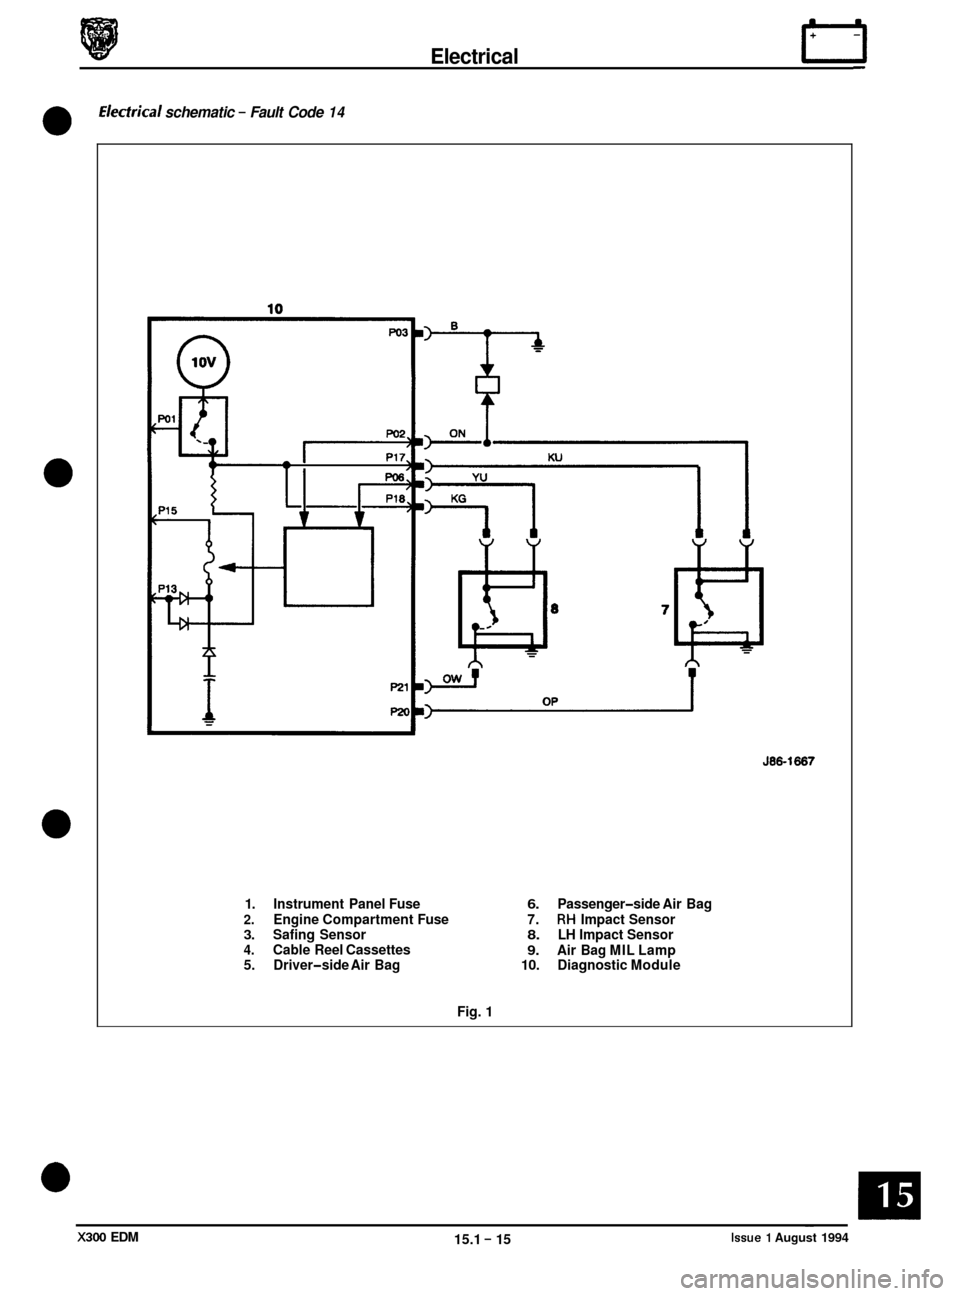 JAGUAR XJ6 1994 2.G Electrical Diagnostic Manual Electrical rl 
Electrkal schematic - Fault Code 14 
0 
0 
0 
0 
J86-1667 
1. Instrument  Panel  Fuse 6. Passenger-side Air  Bag 
2. Engine  Compartment  Fuse 7. RH Impact Sensor 3. Safing  Sensor 8. L